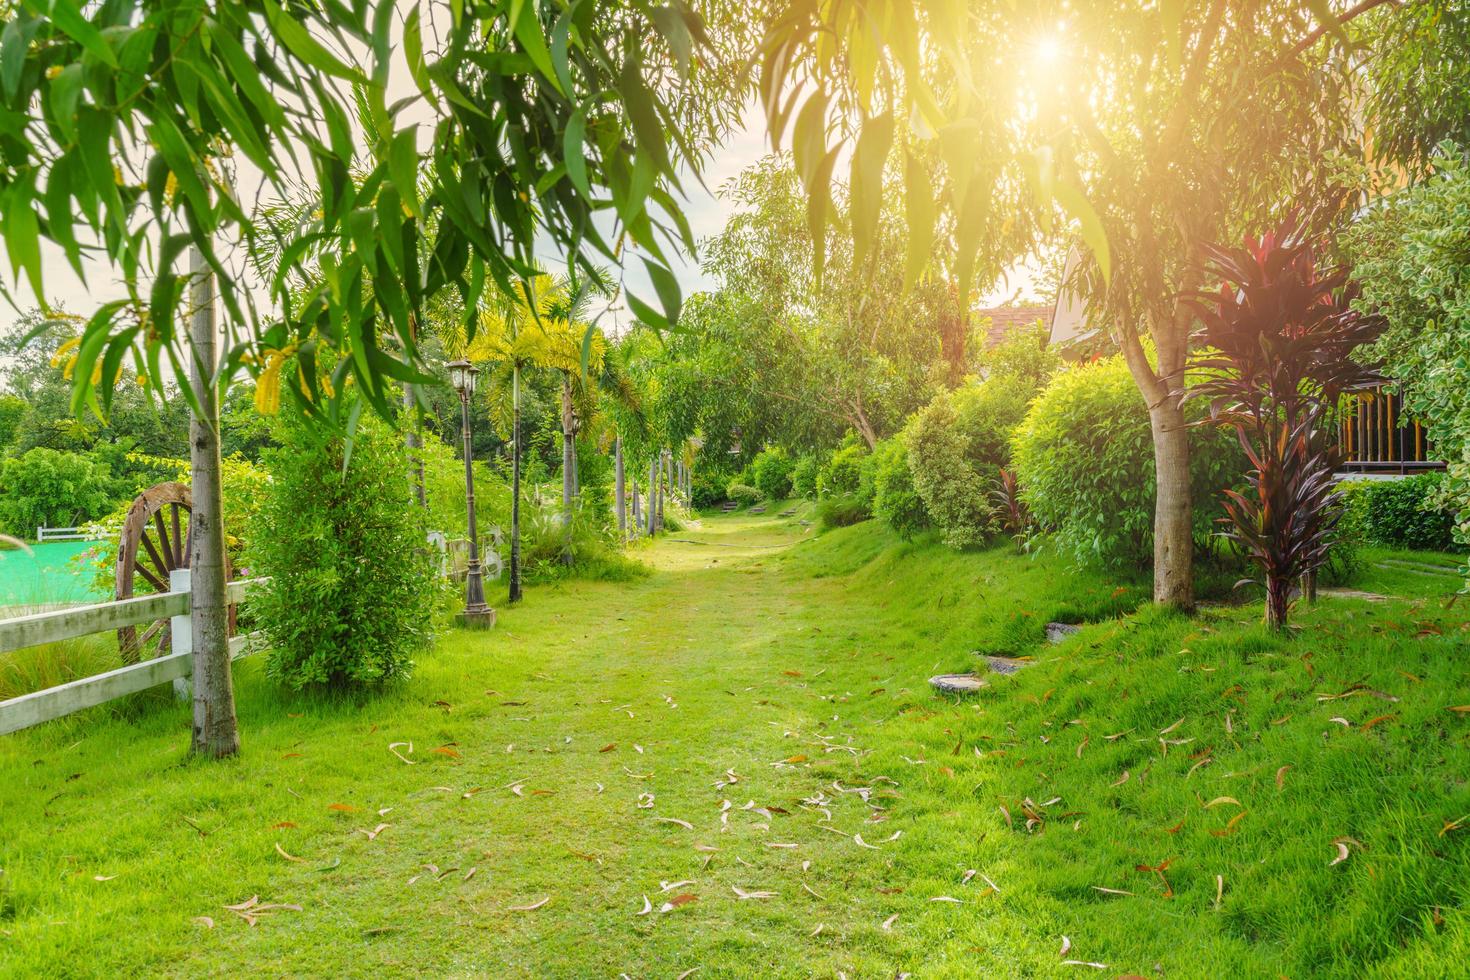 Biblical Garden: Gardening Lessons From the Bible (Part 3)